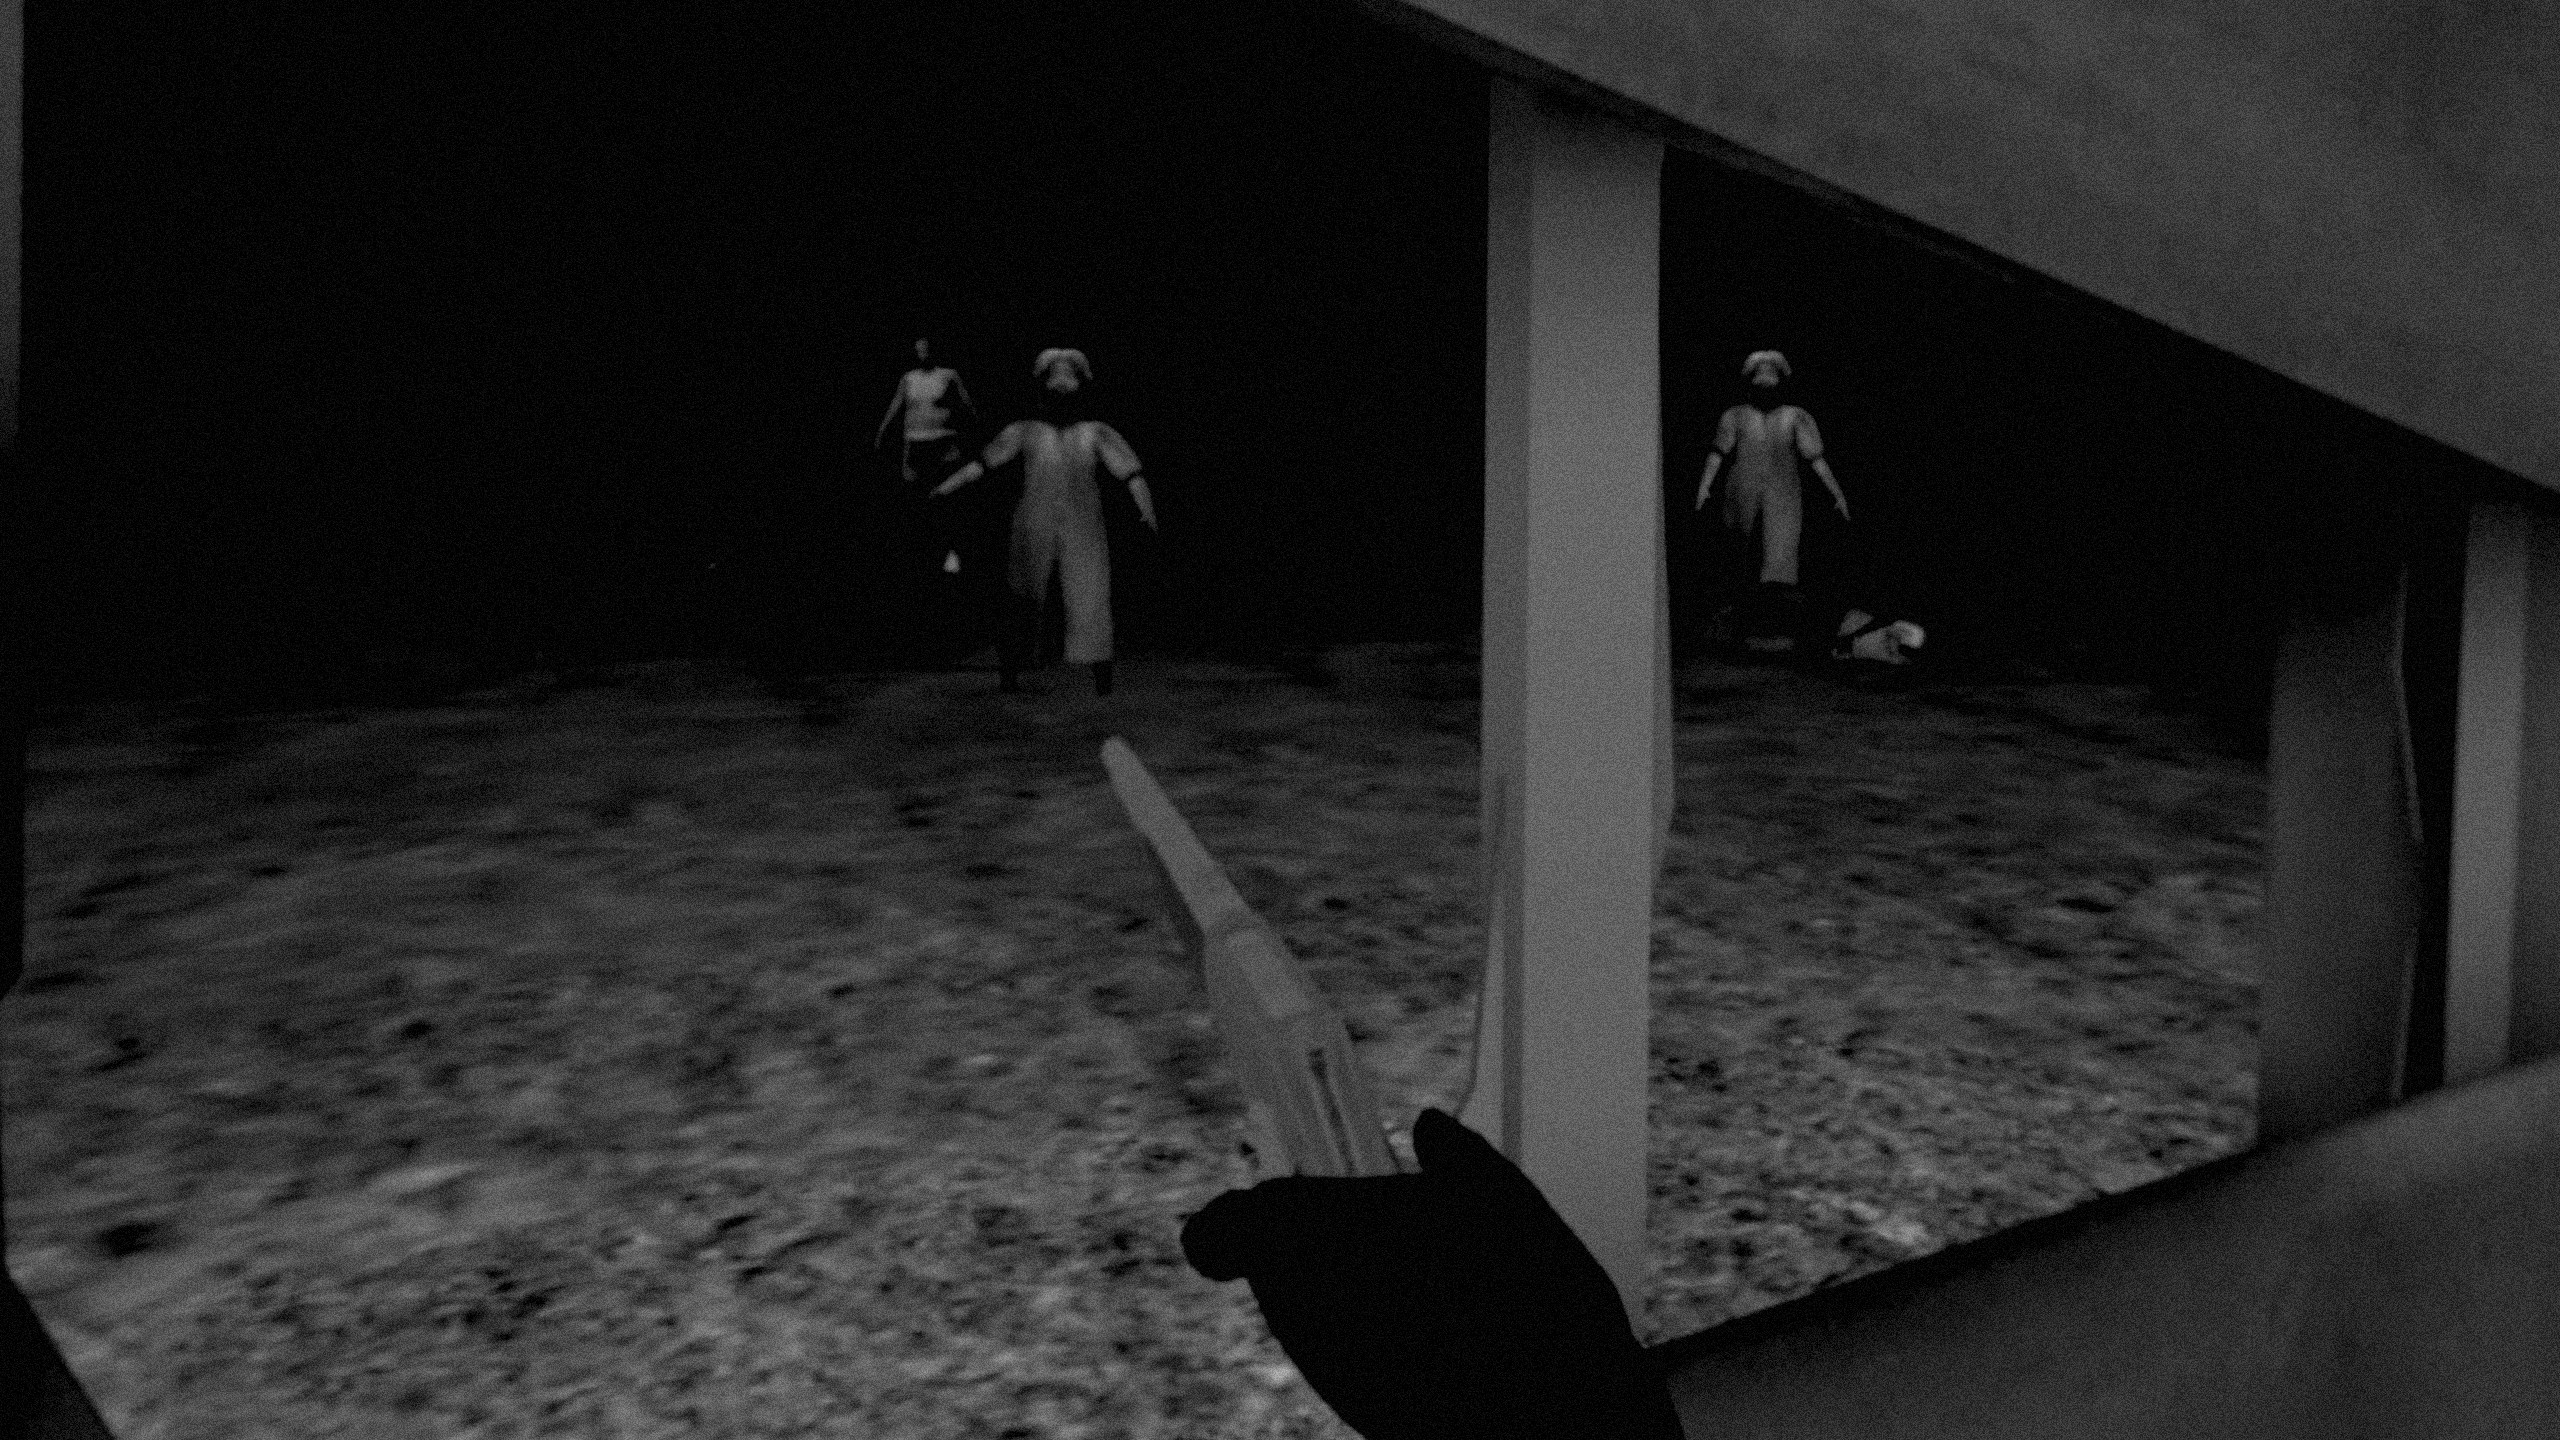 Night Of The Living Dead VR screenshot